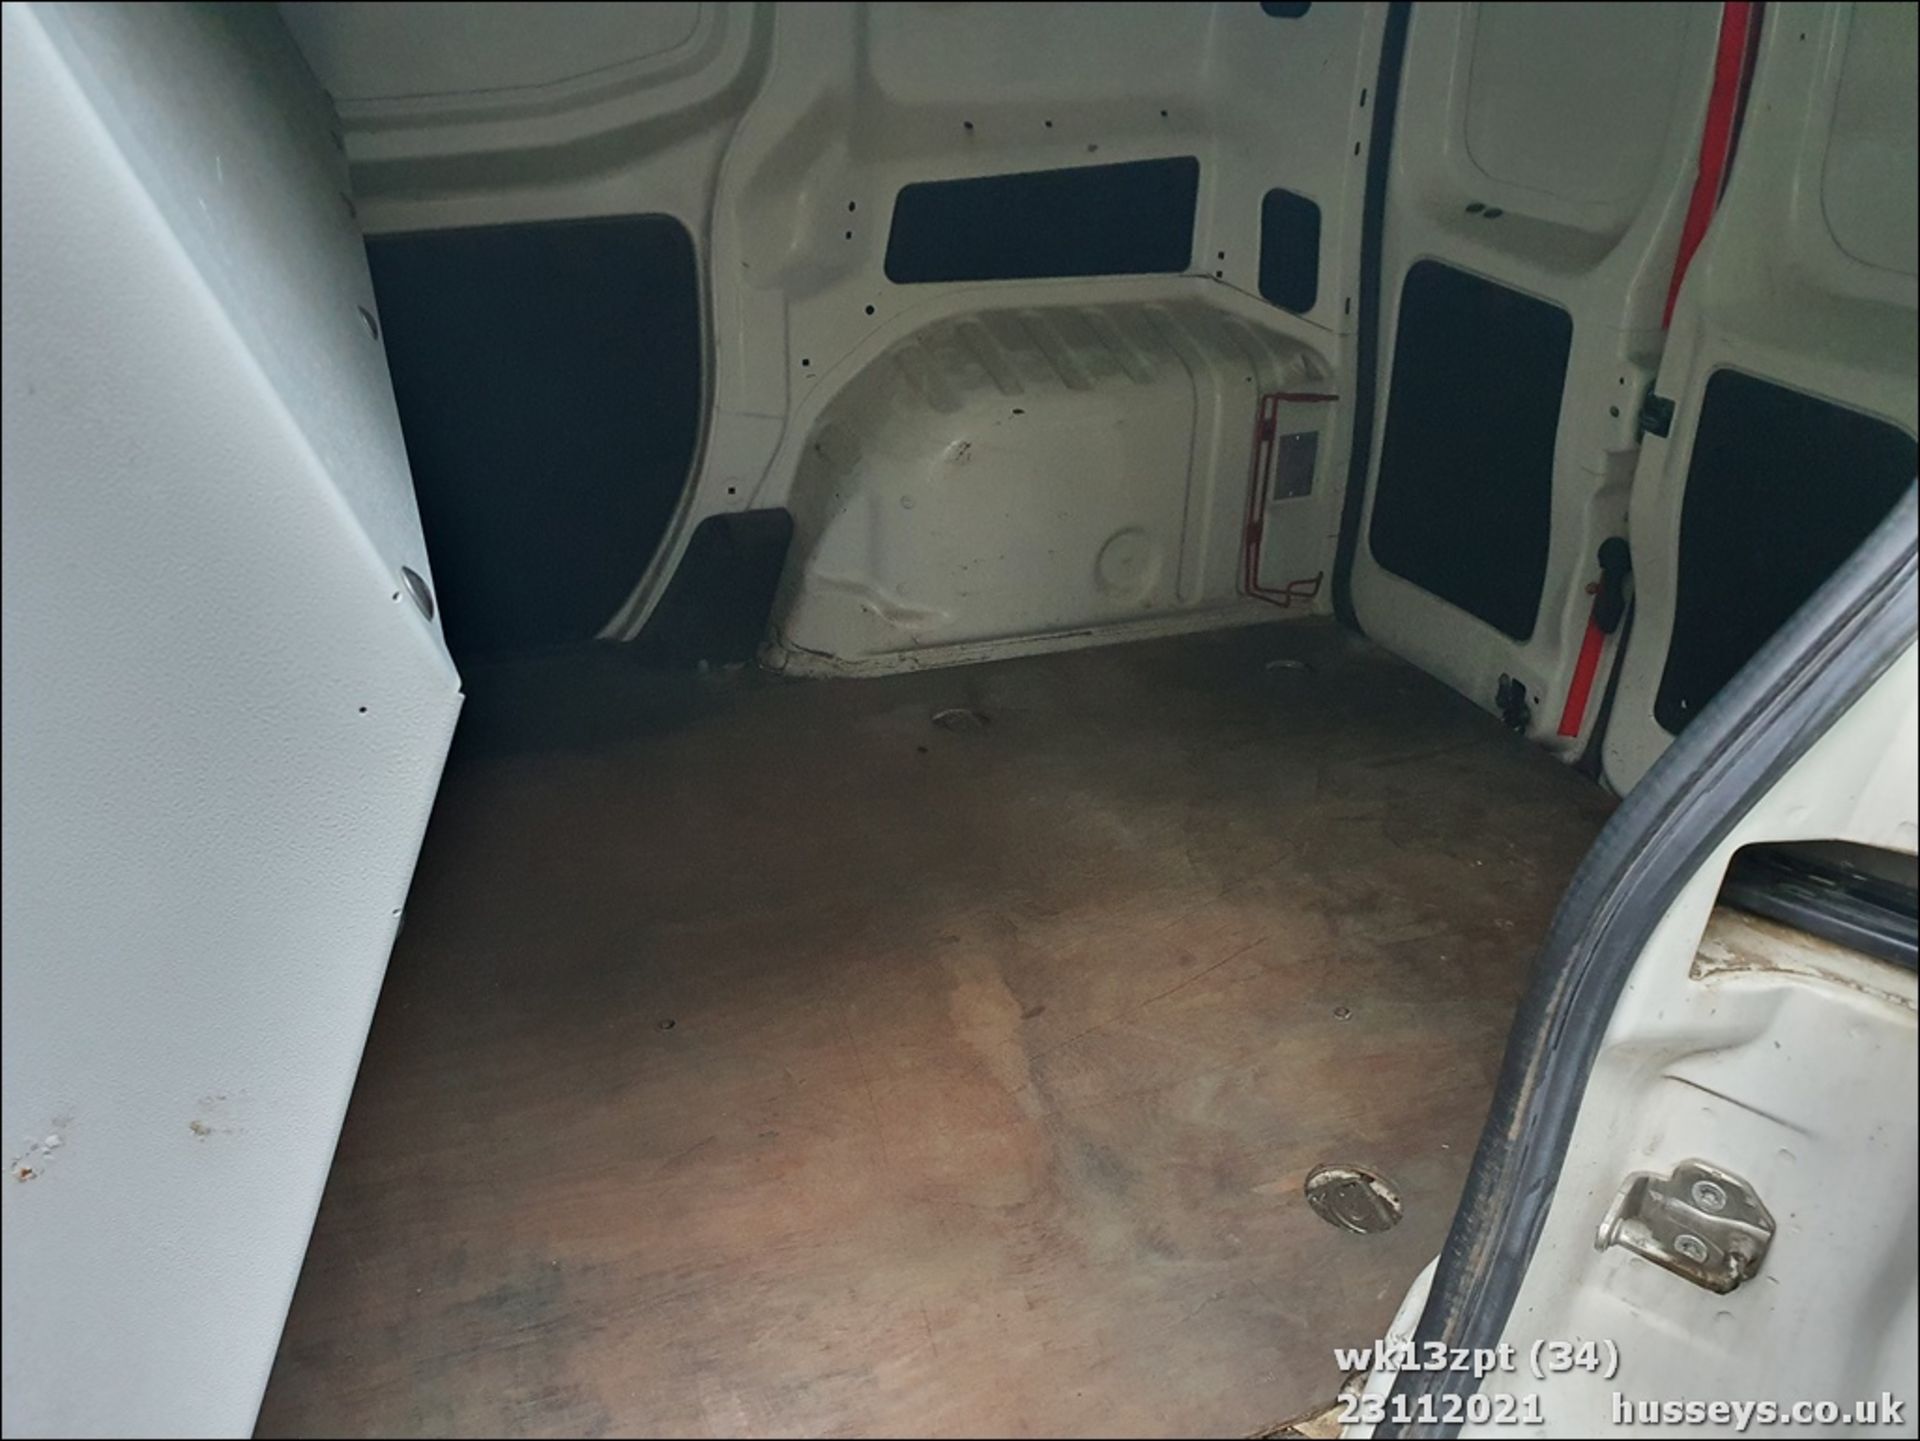 13/13 PEUGEOT BIPPER SE HDI - 1248cc 5dr Van (White, 125k) - Image 34 of 34